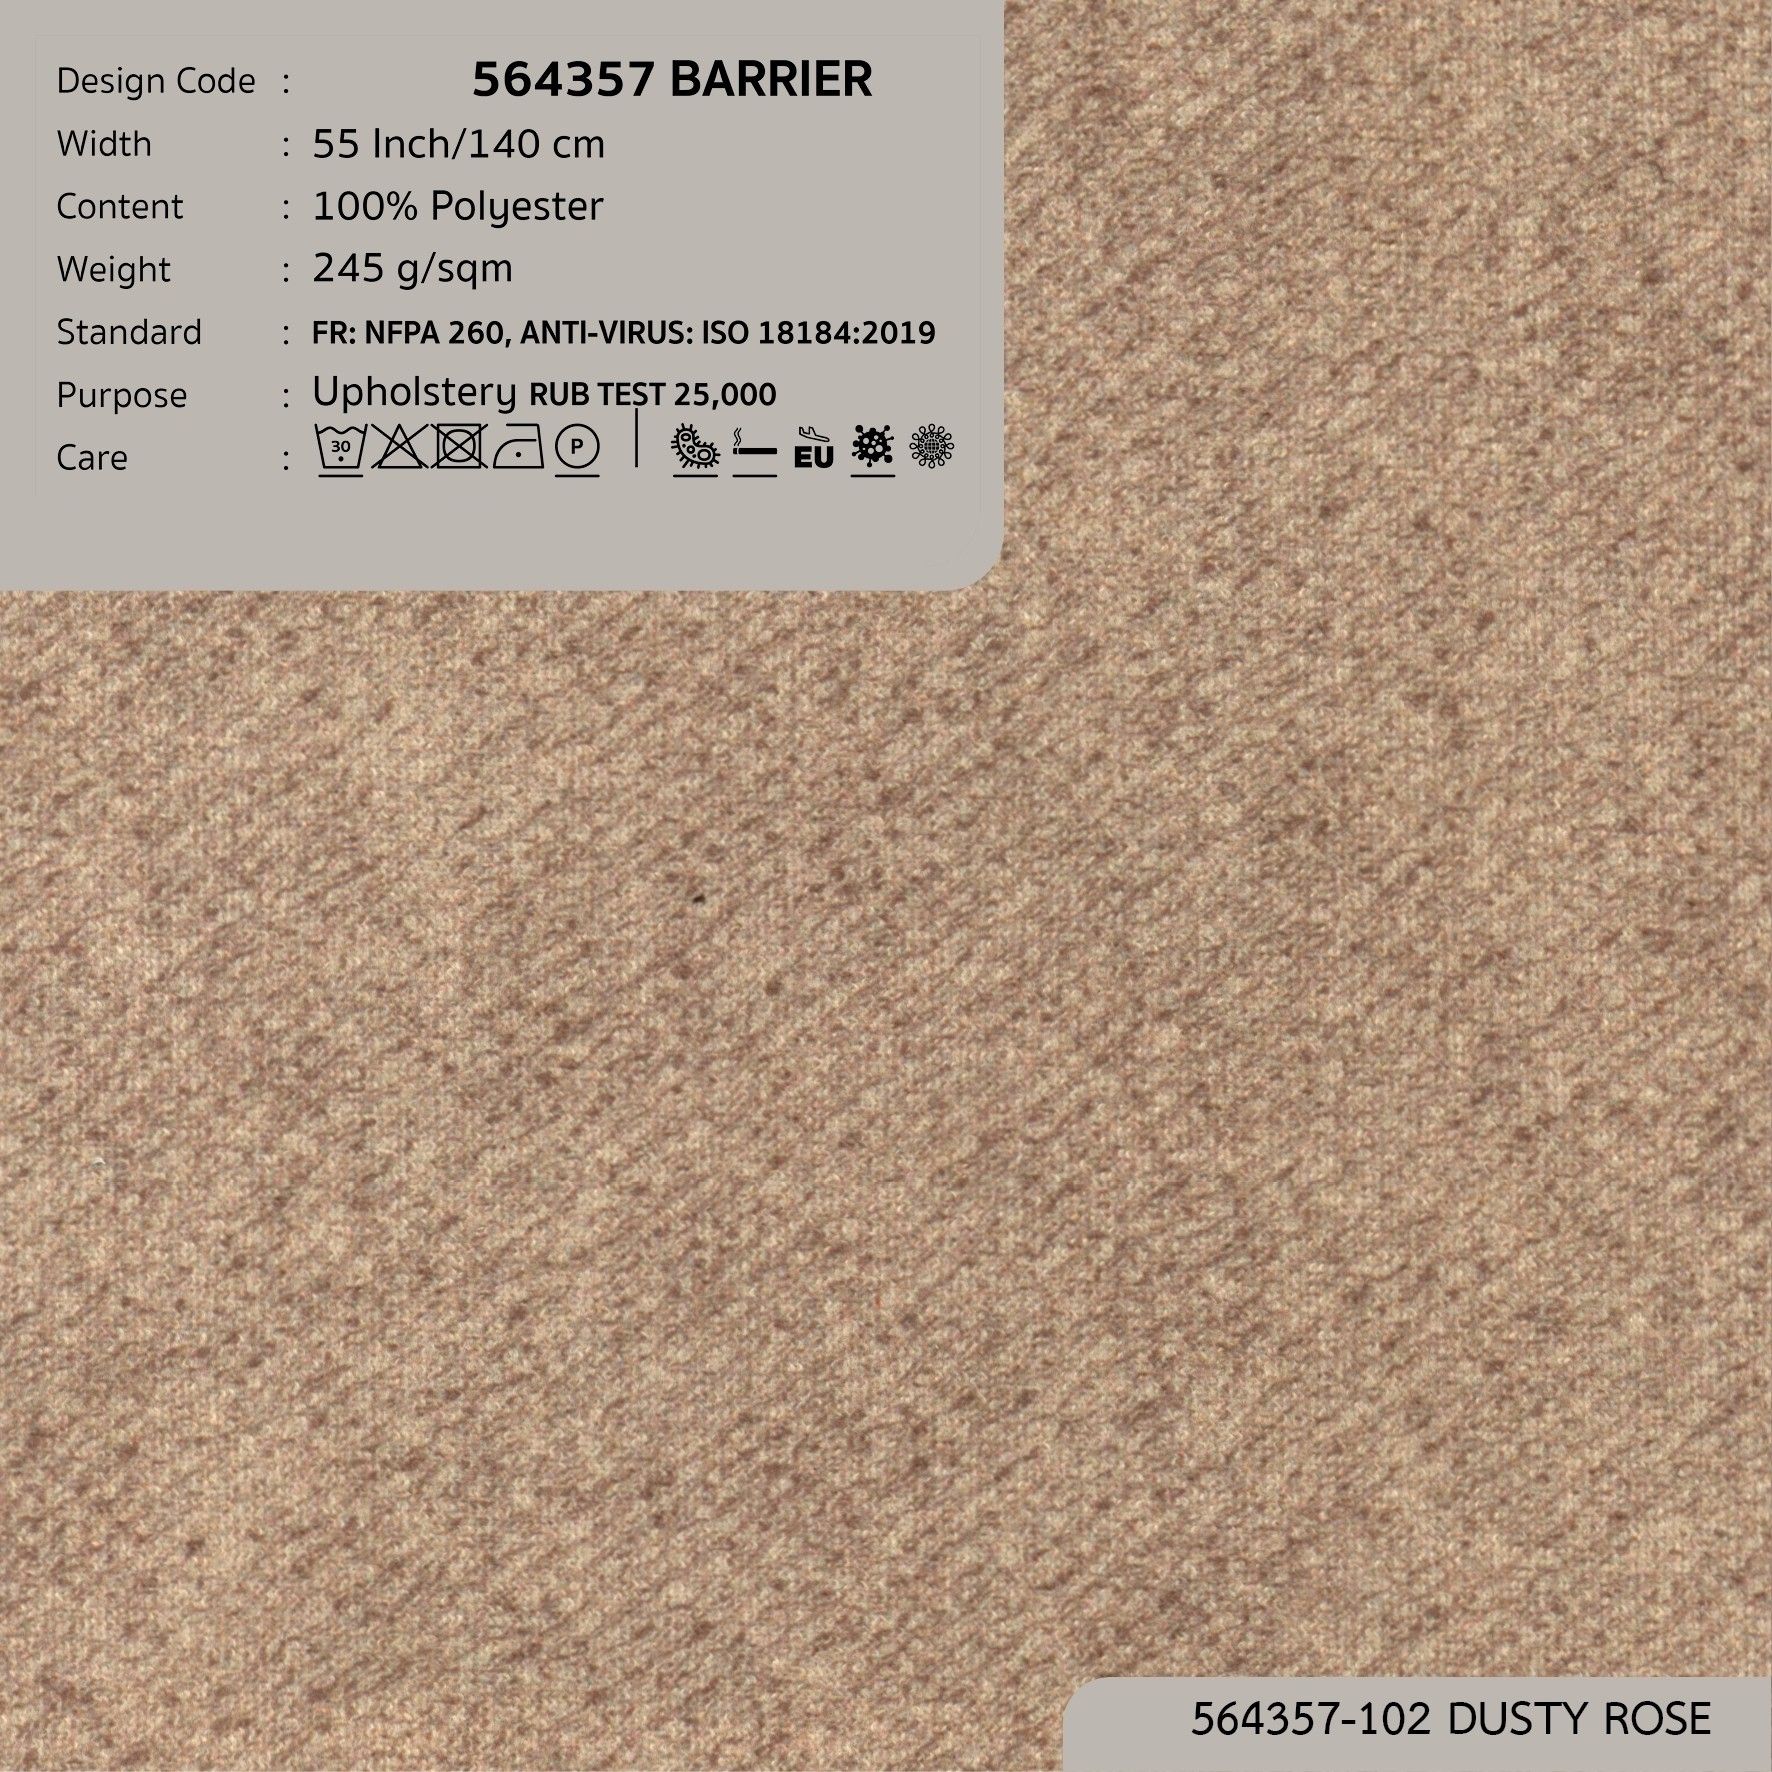  BARRIER 564357 có sẵn tại factory warehouse 